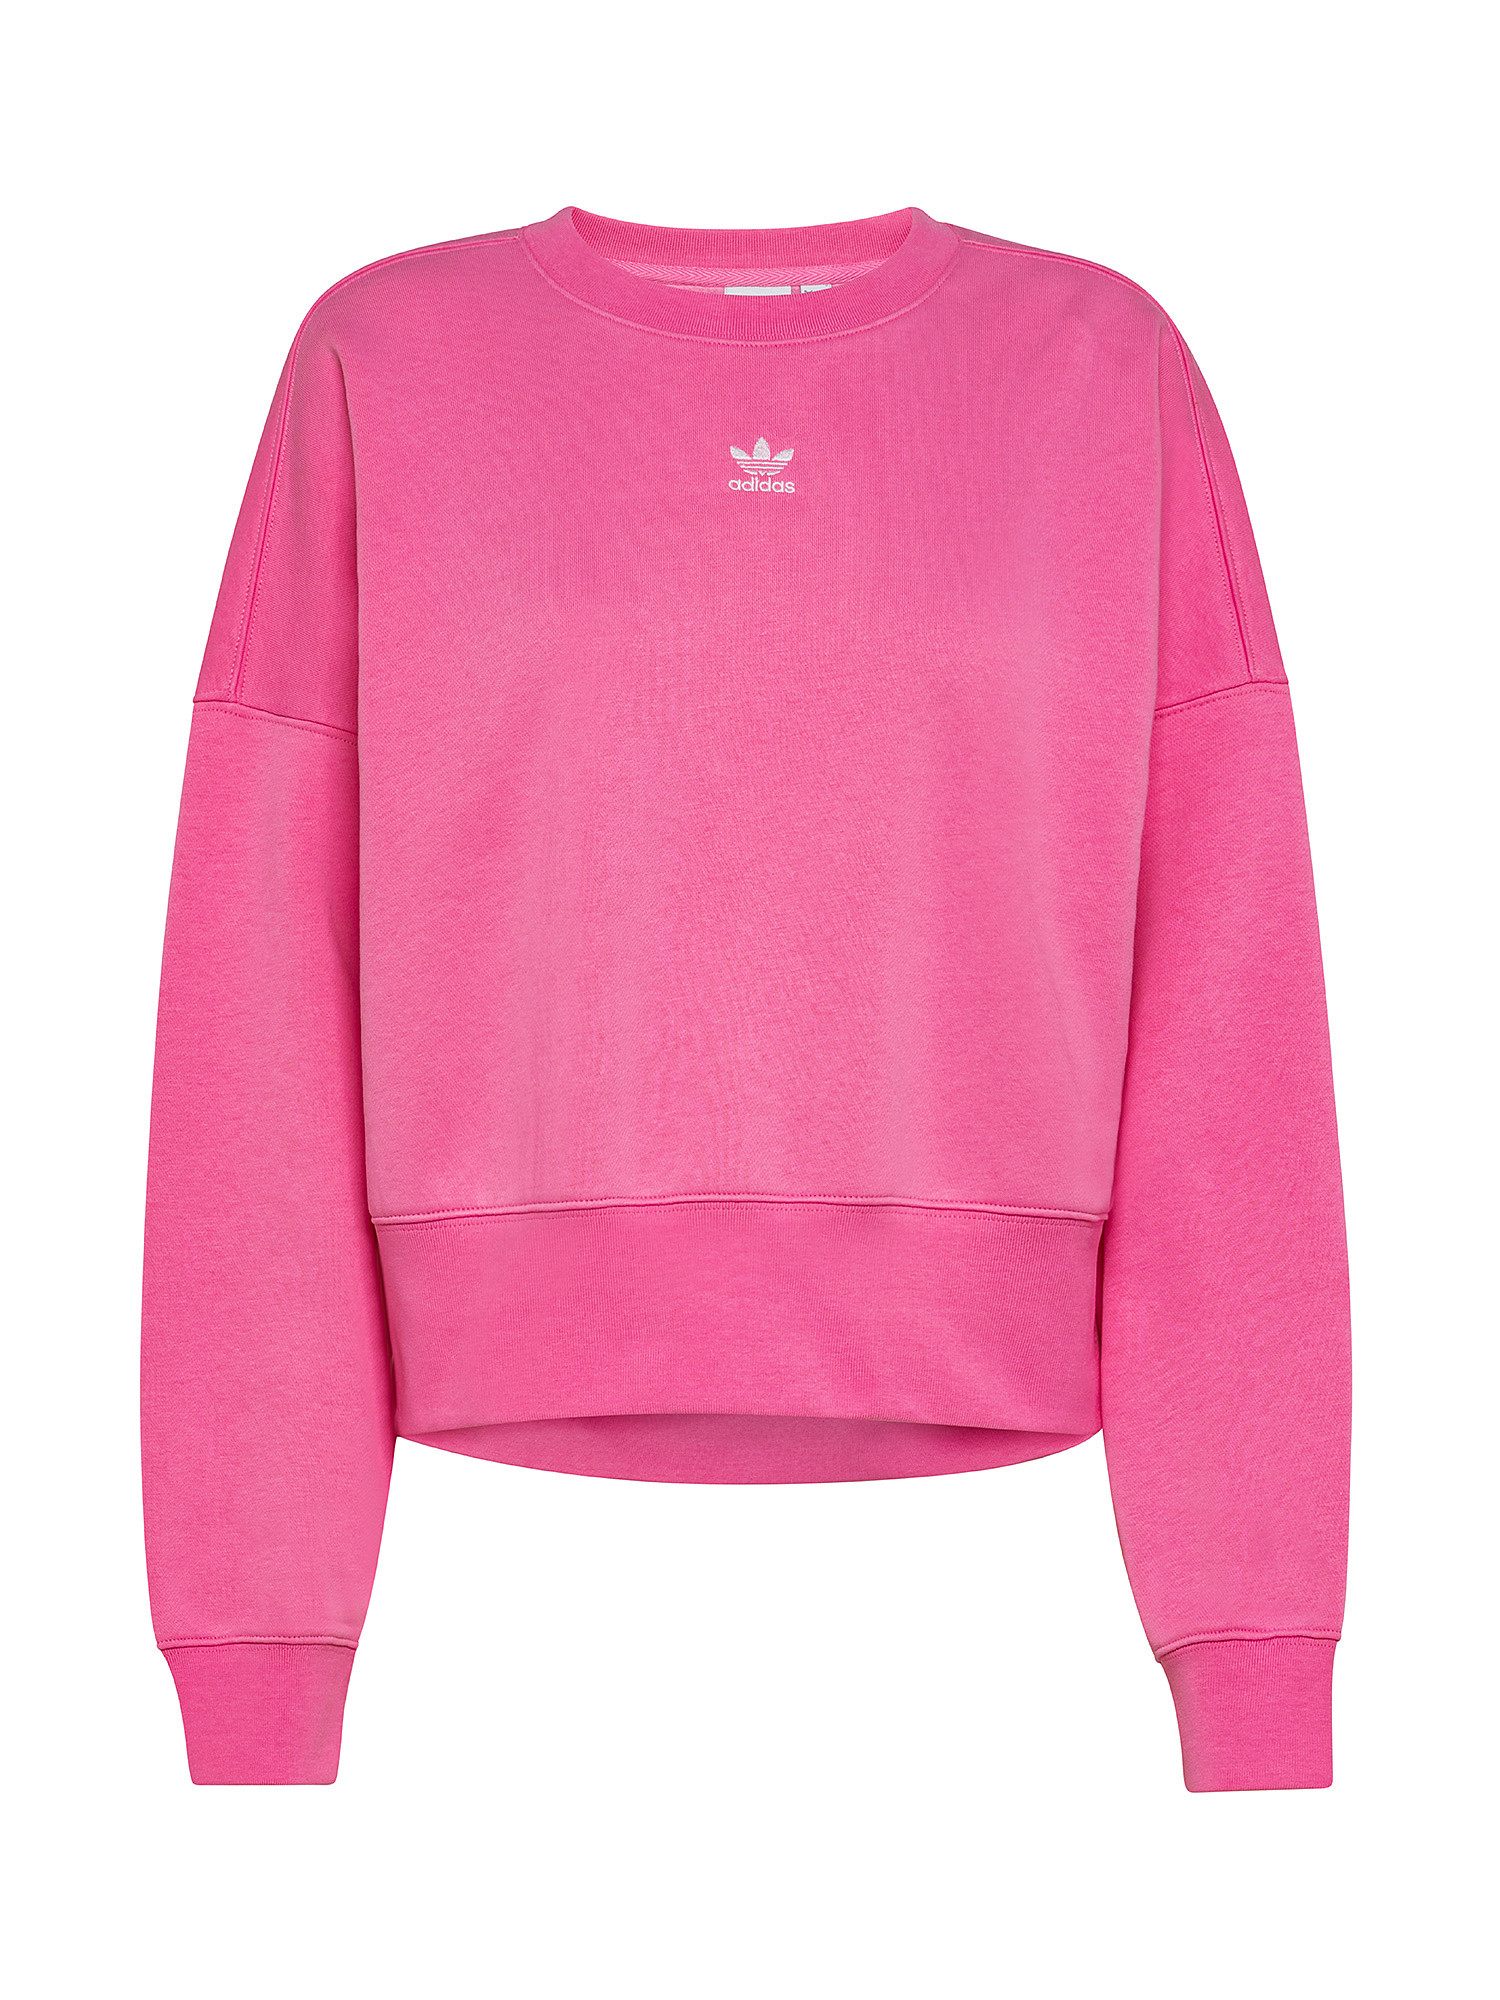 Adidas - Sweatshirt with logo, Pink, large image number 0